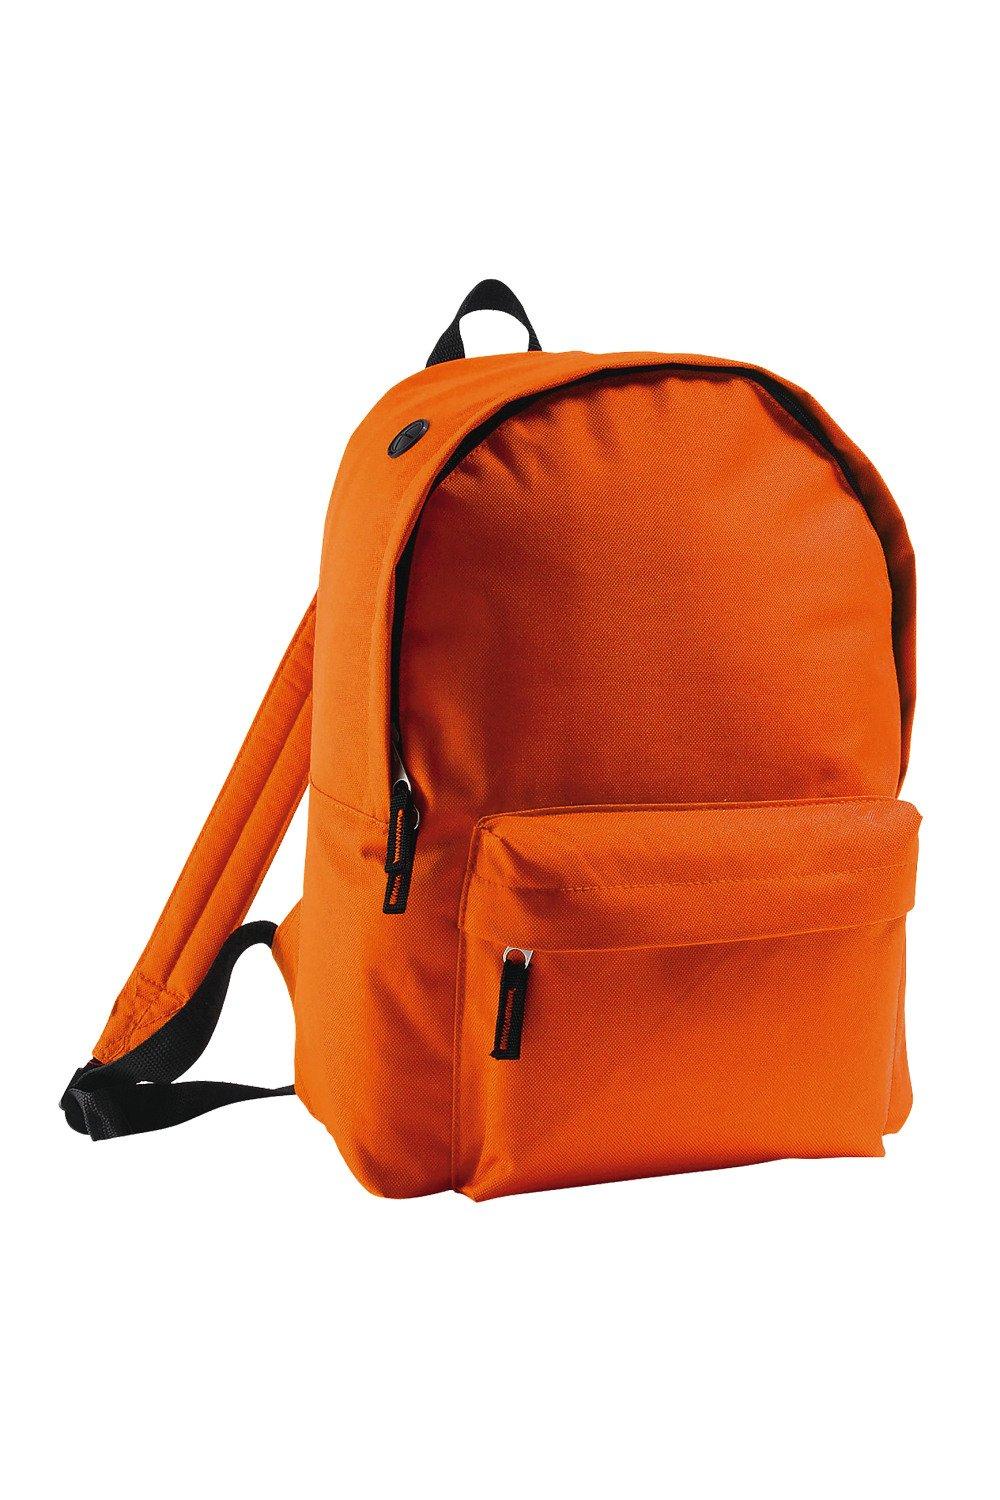 Рюкзак / сумка-рюкзак Rider SOL'S, оранжевый рюкзак rider оранжевый